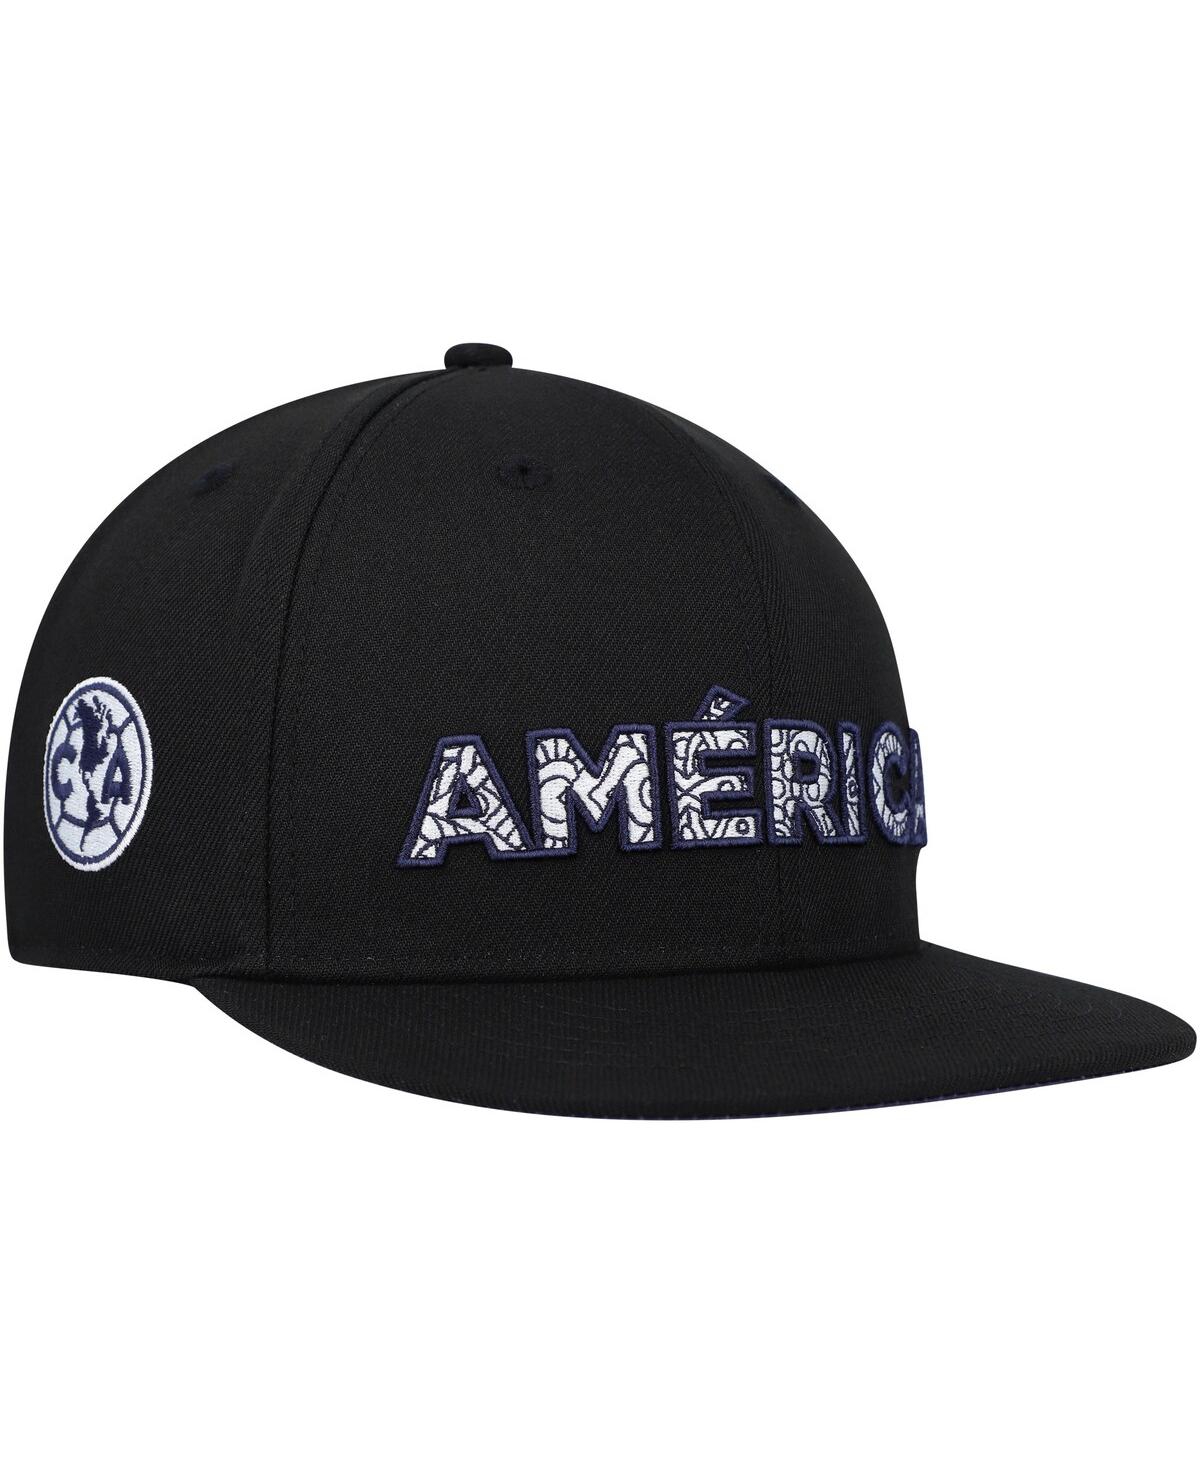 Men's Black Club America Bode Snapback Hat - Black